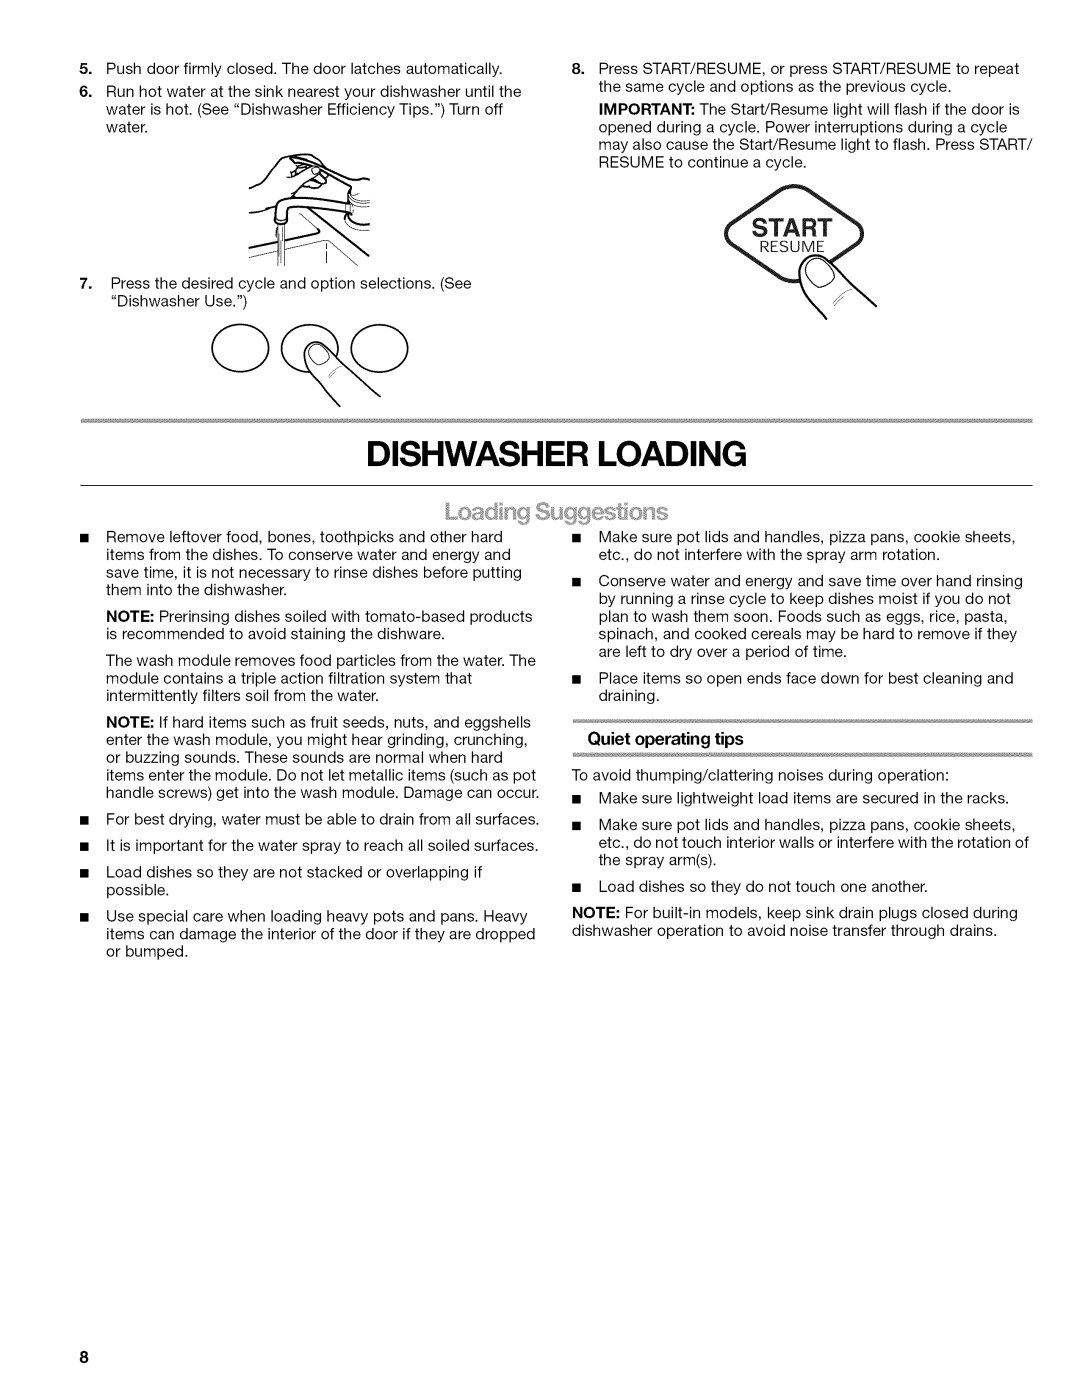 Kenmore 665.1622 manual Dishwasher Loading, Quiet operating tips 